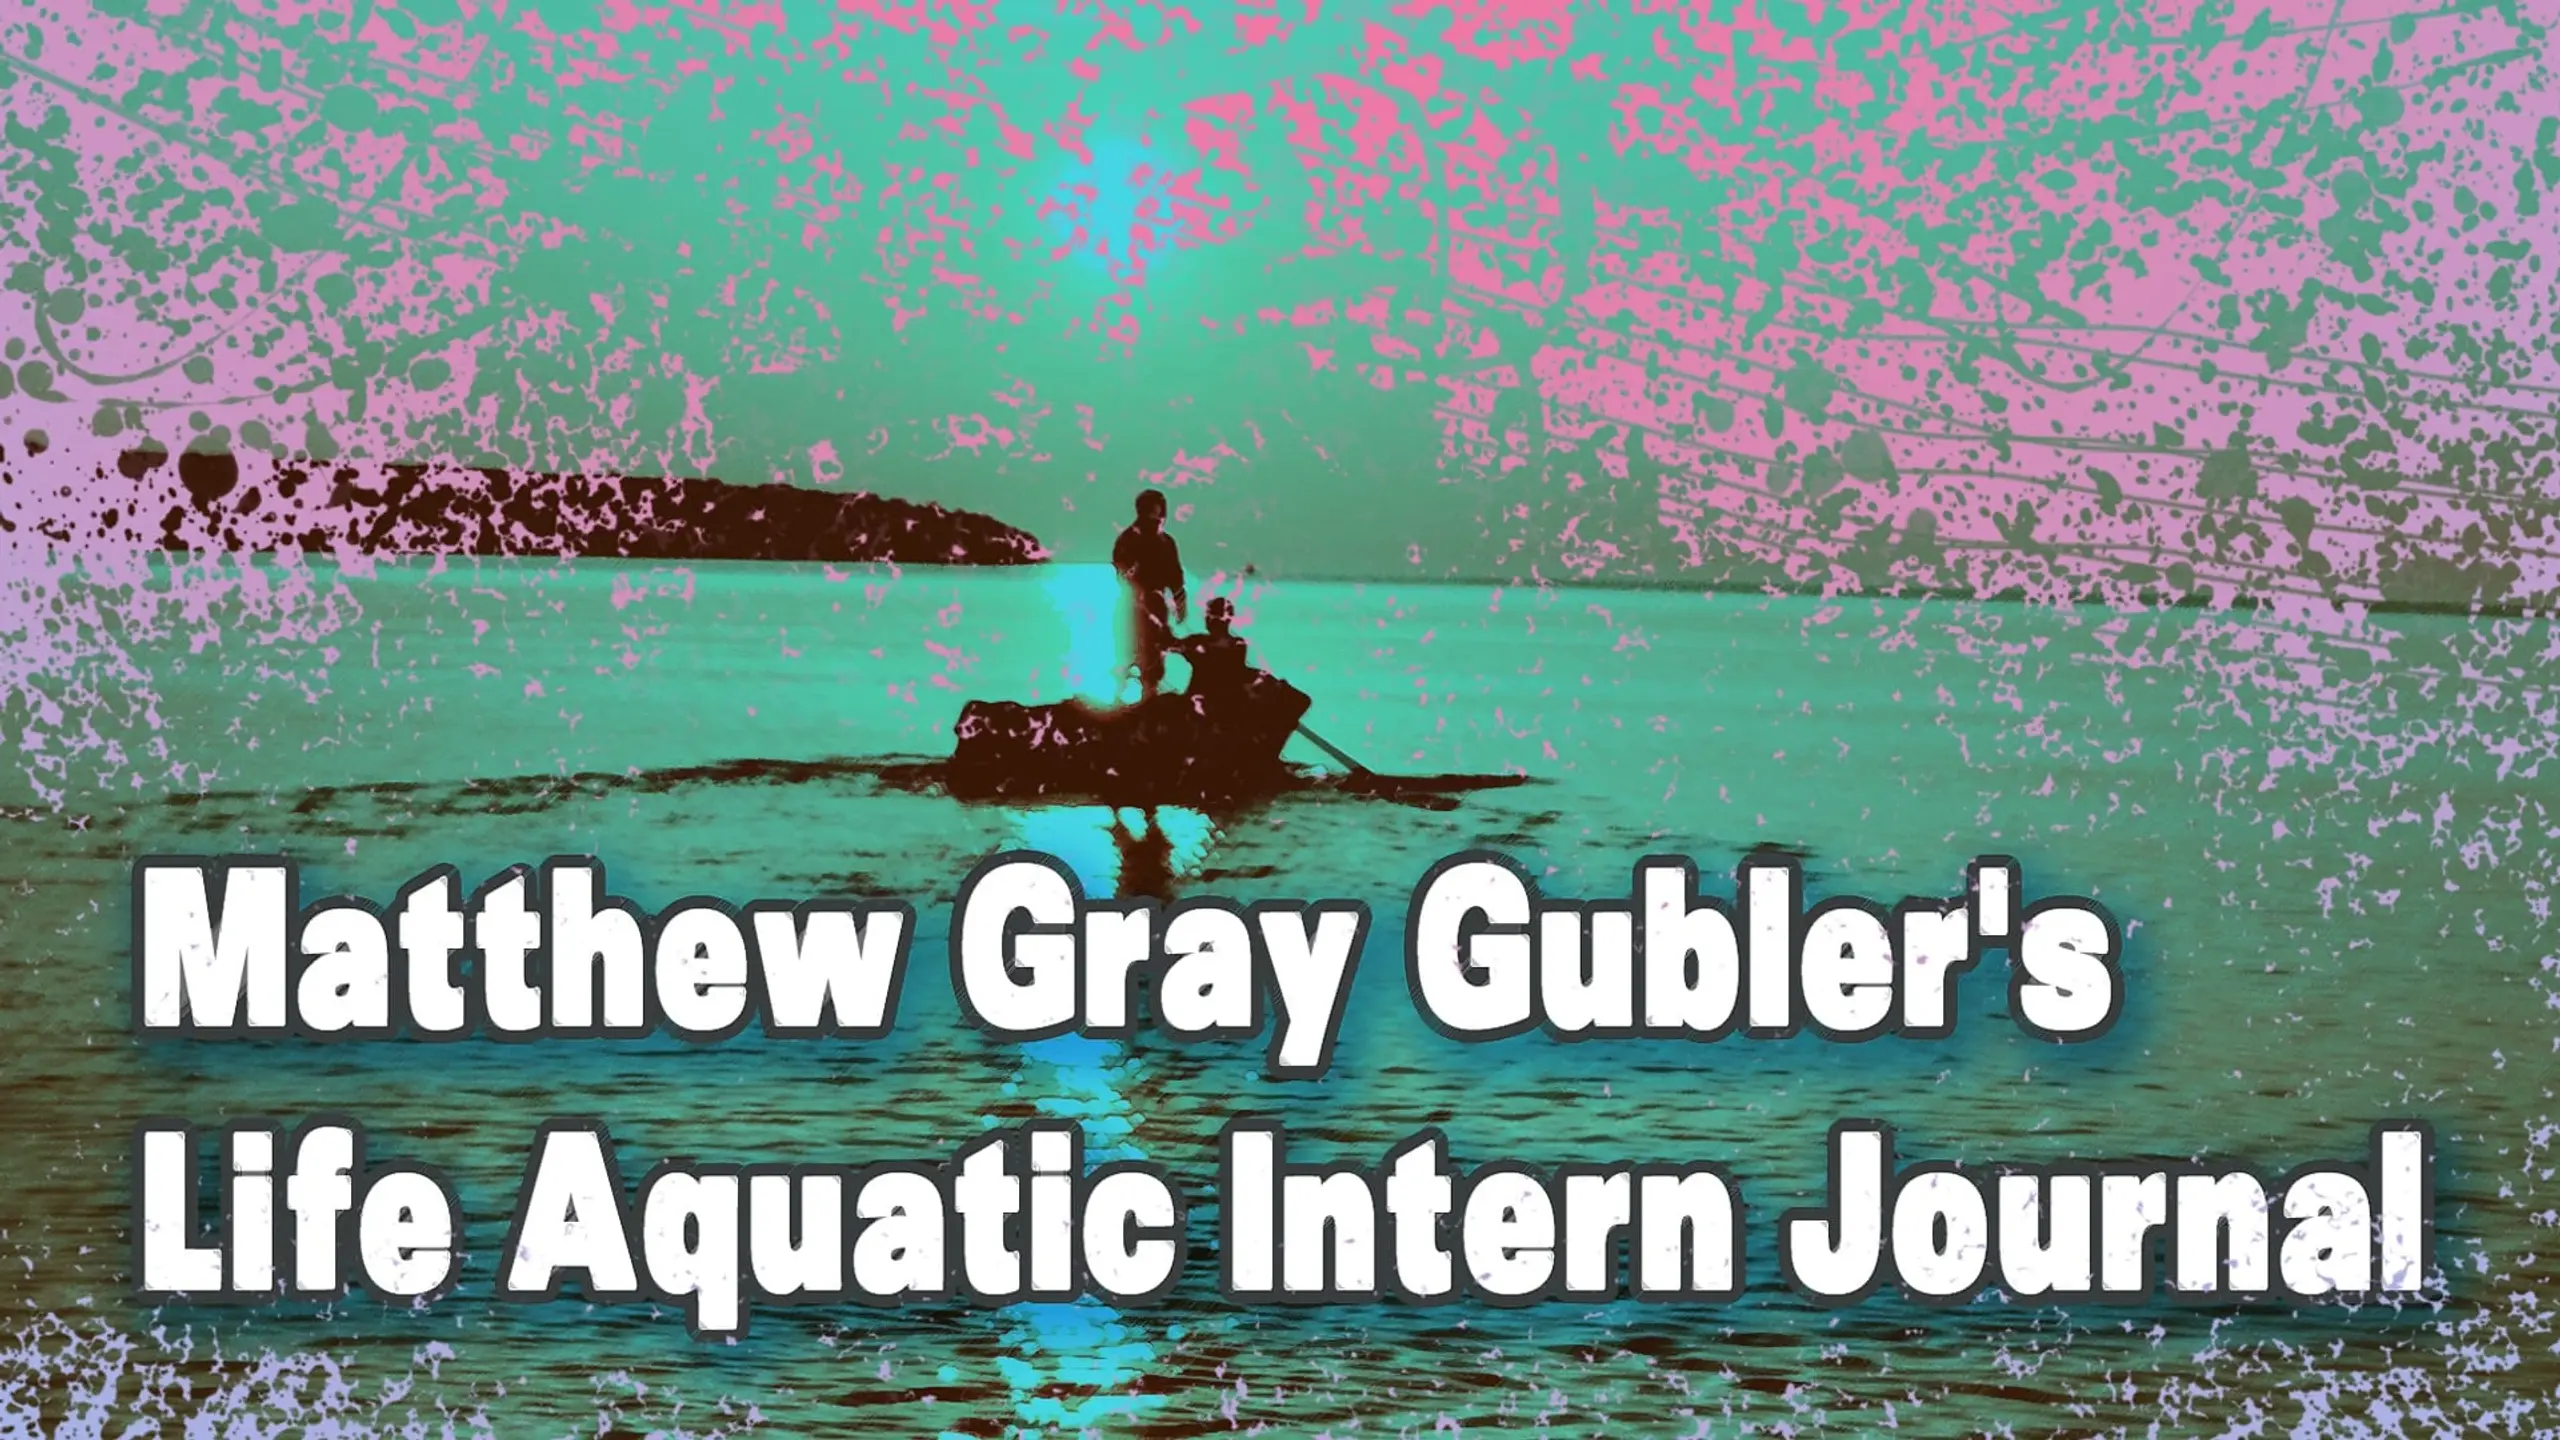 Matthew Gray Gubler's Life Aquatic Intern Journal